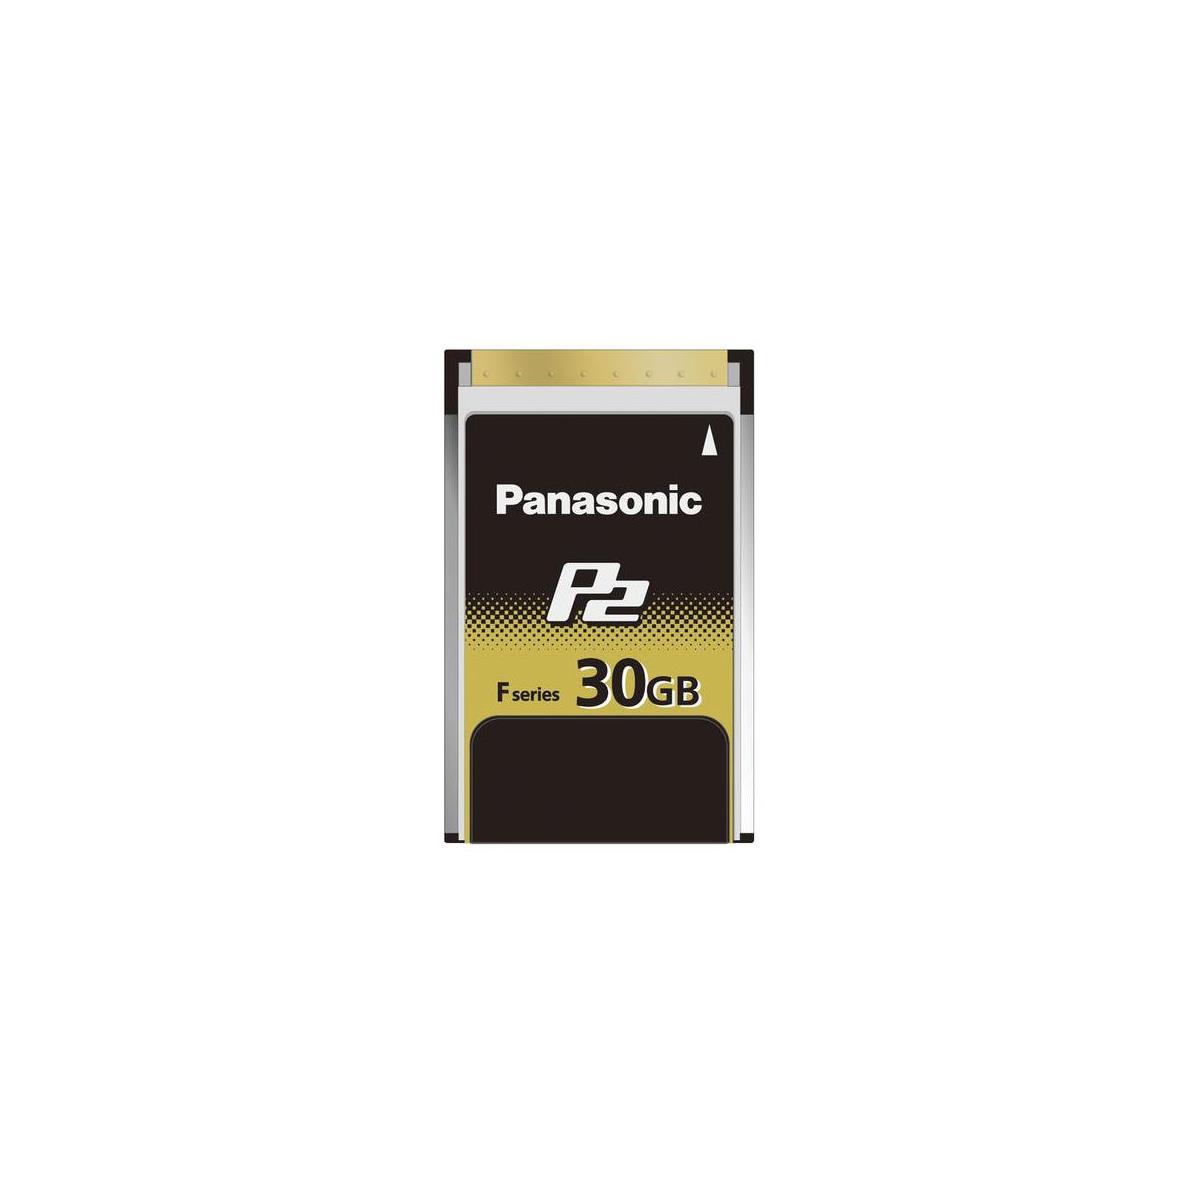 Image of Panasonic F Series 30GB P2 Memory Card